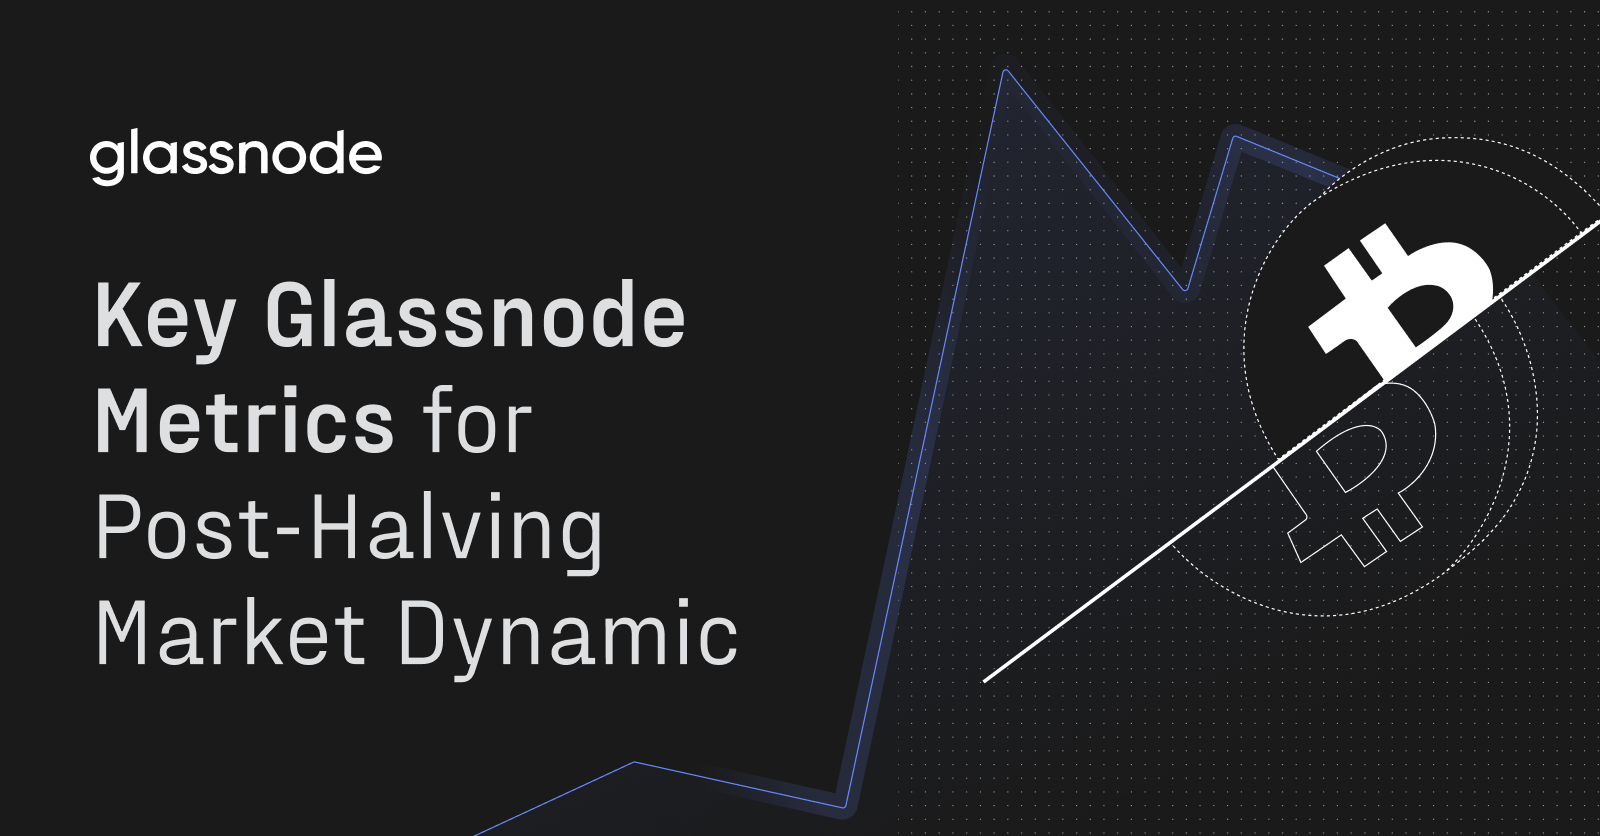 Key Glassnode Metrics for Post-Halving Market Dynamics